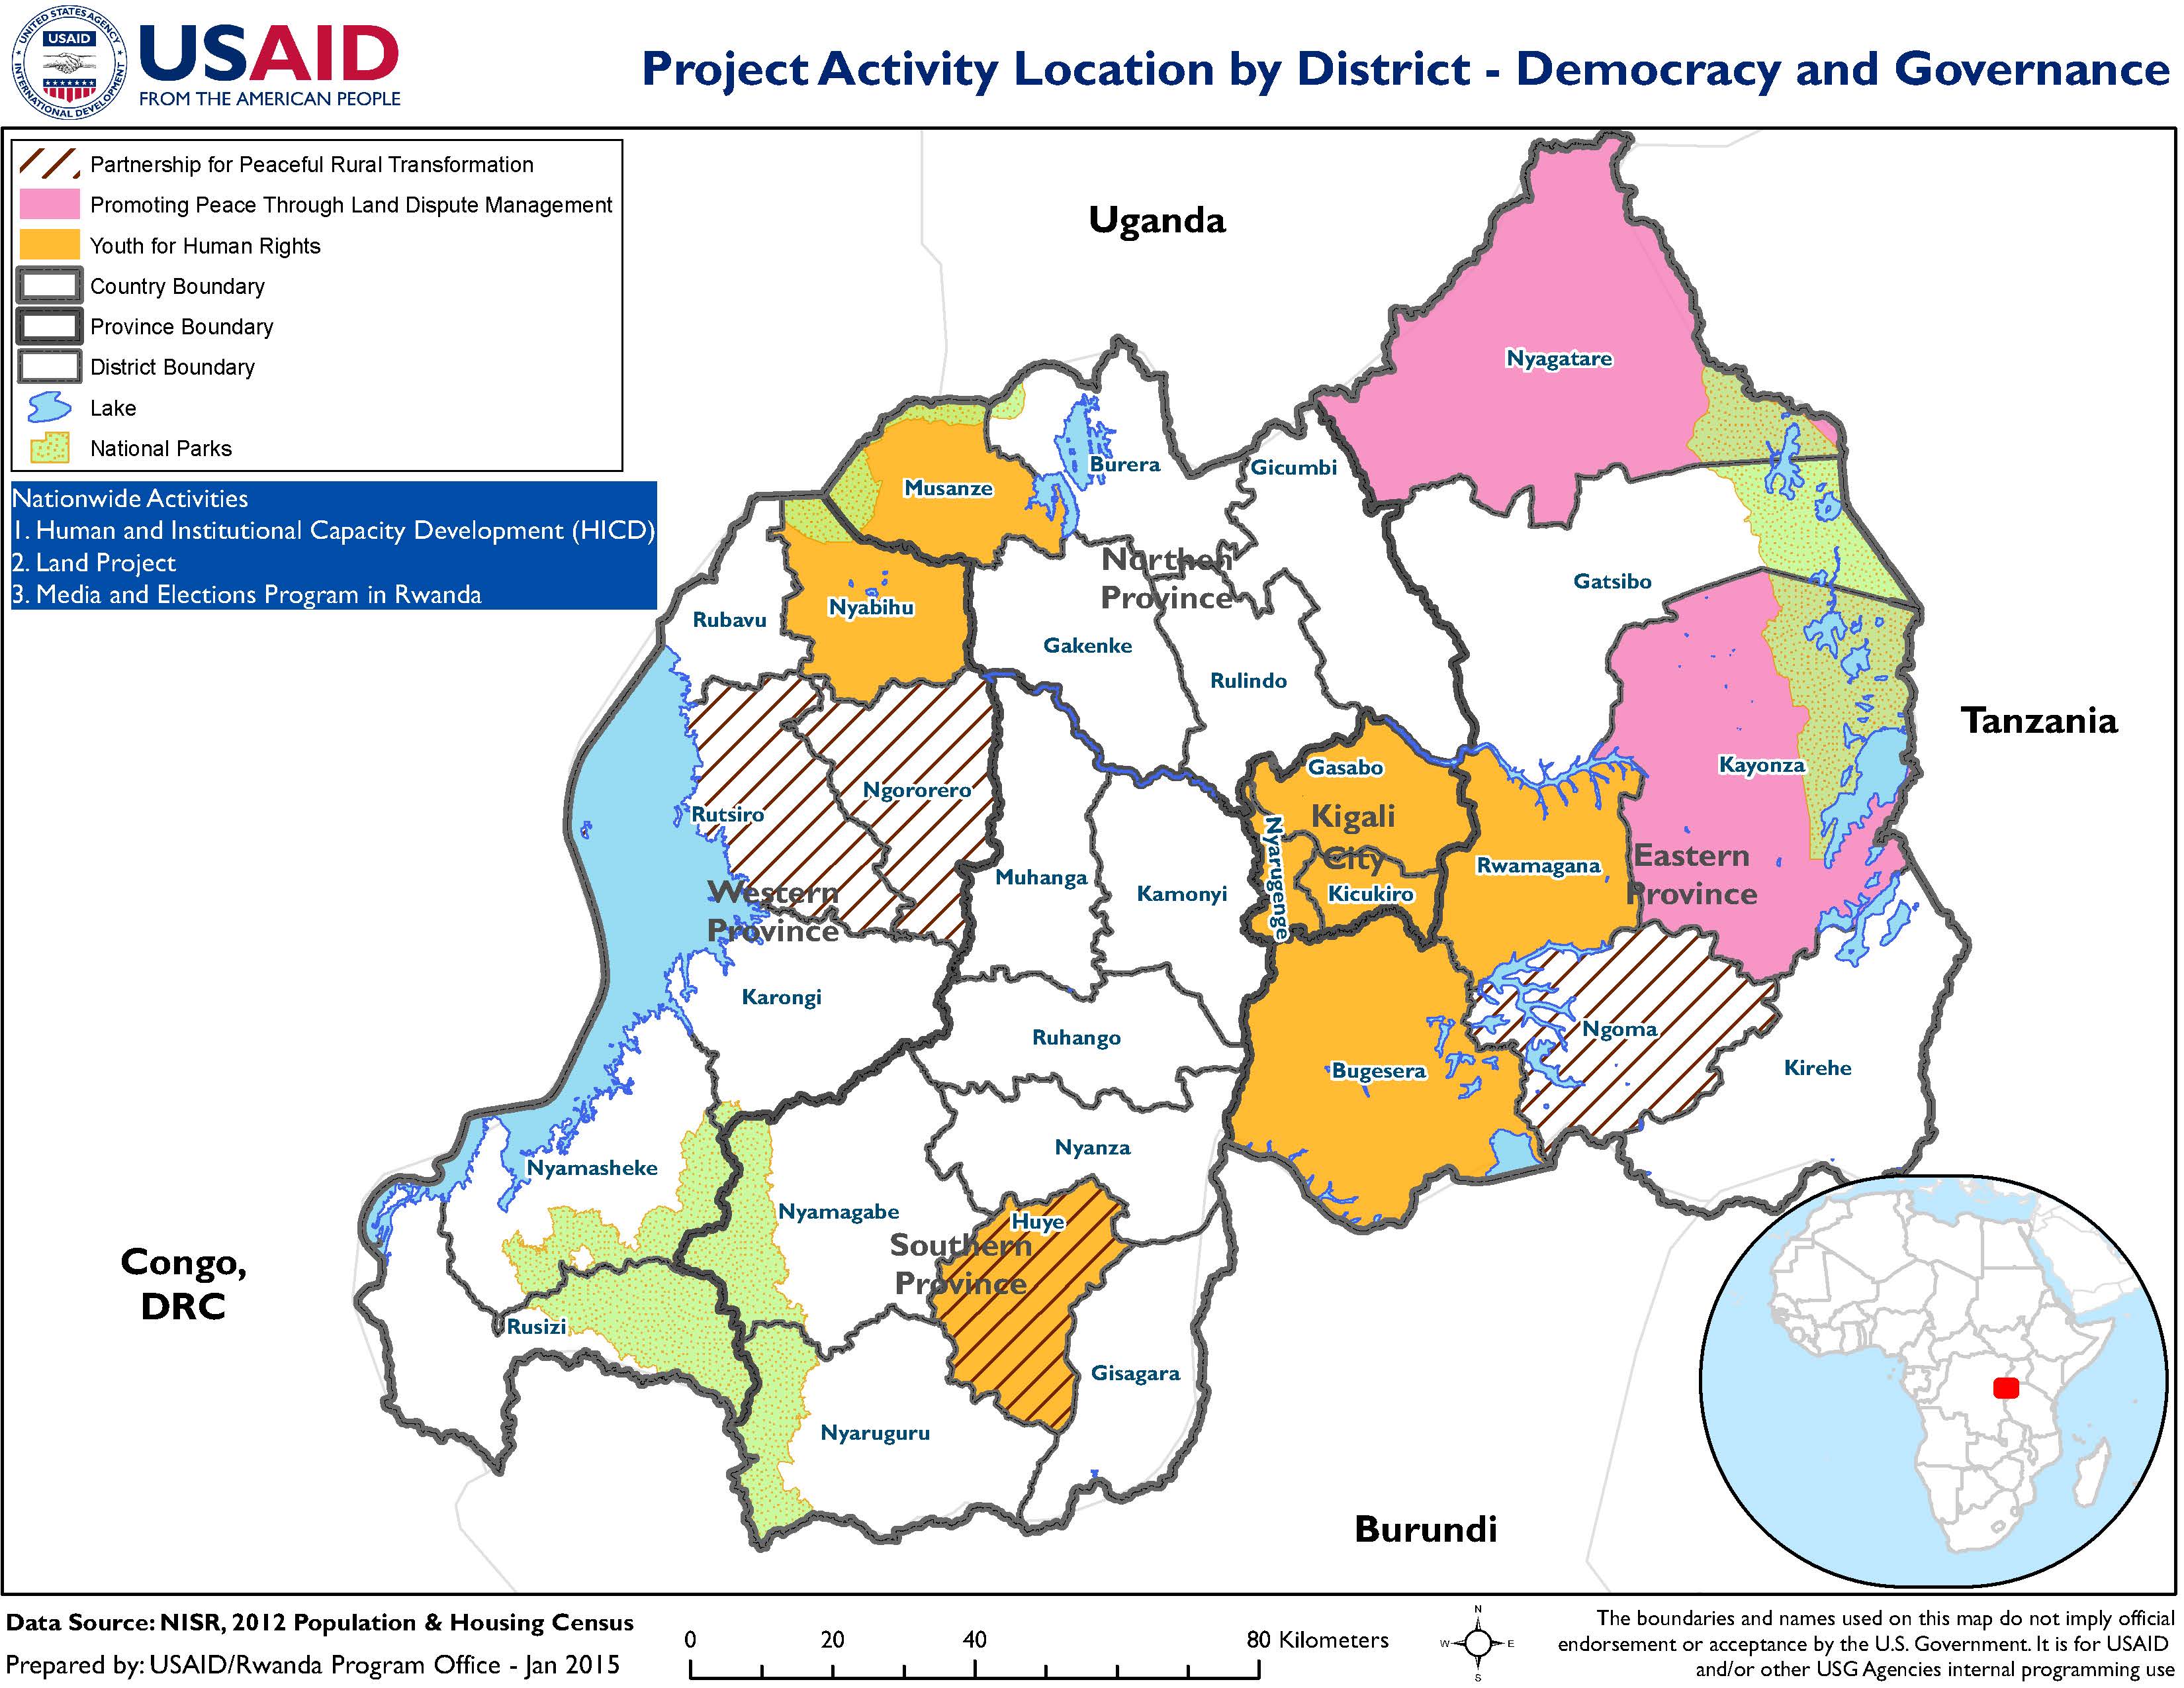 FY 2014 USAID/Rwanda's Democracy & Governance Program Locations by District